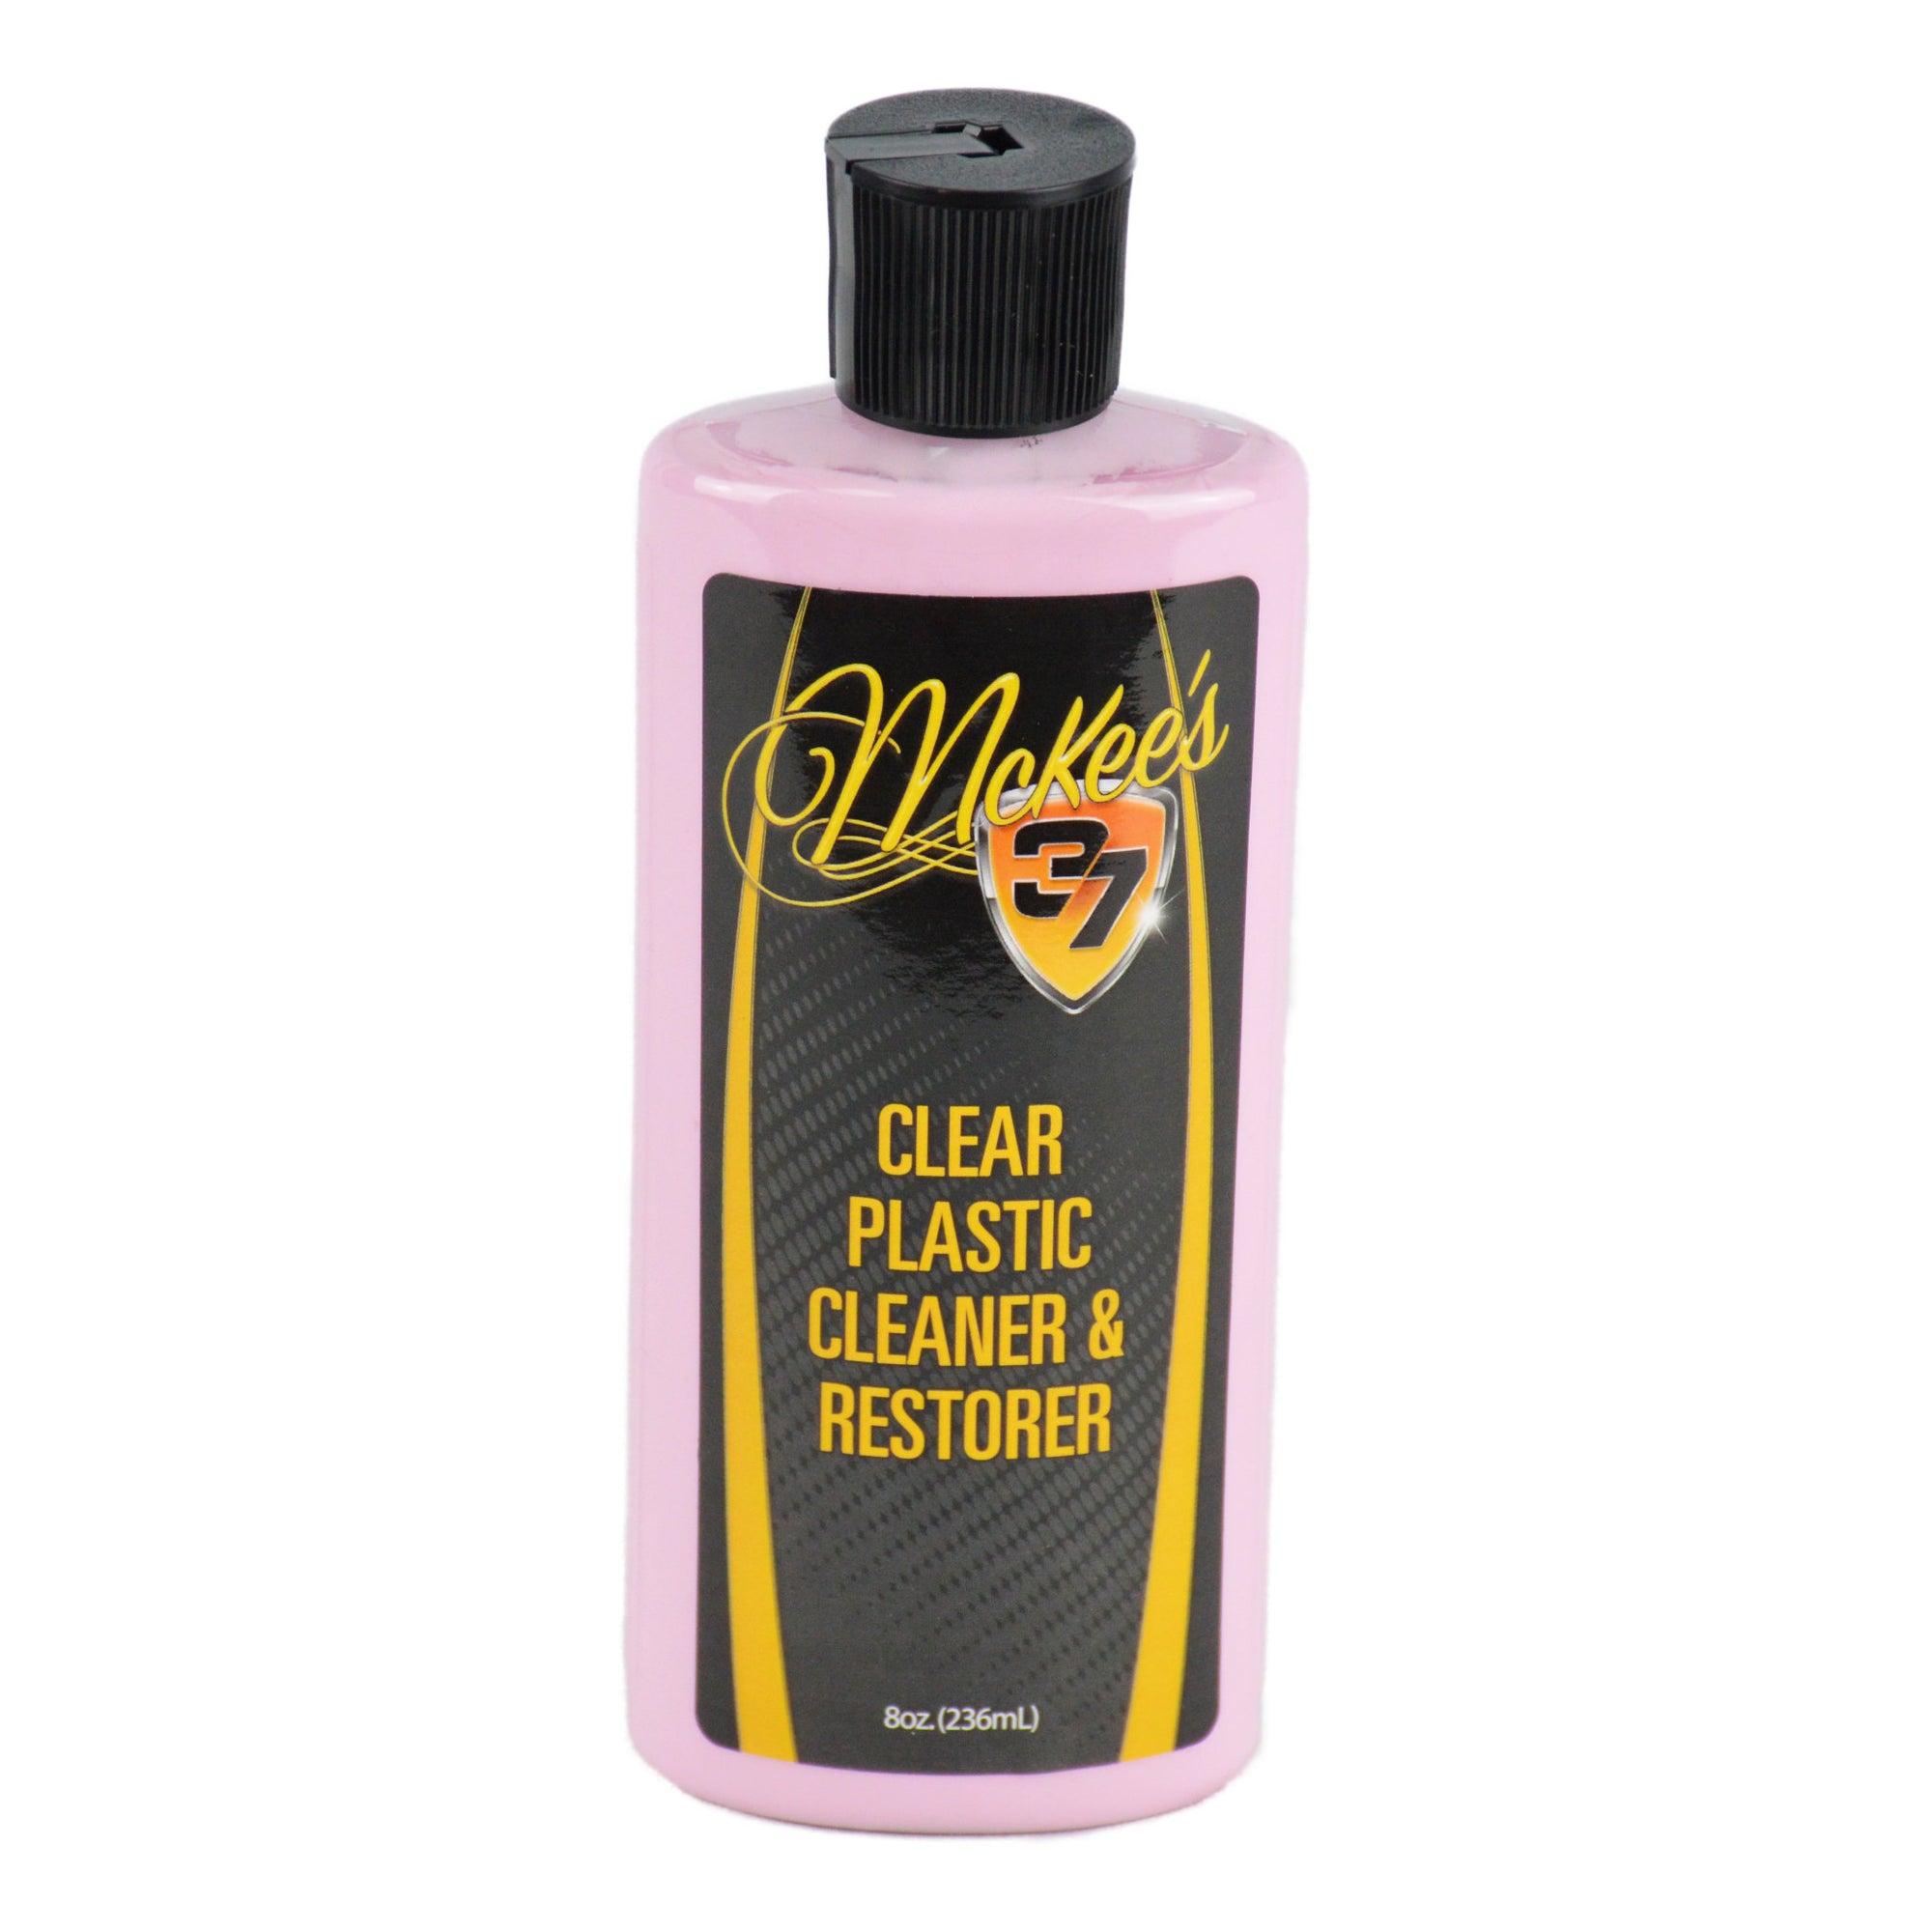 Clear Plastic Cleaner & Restorer